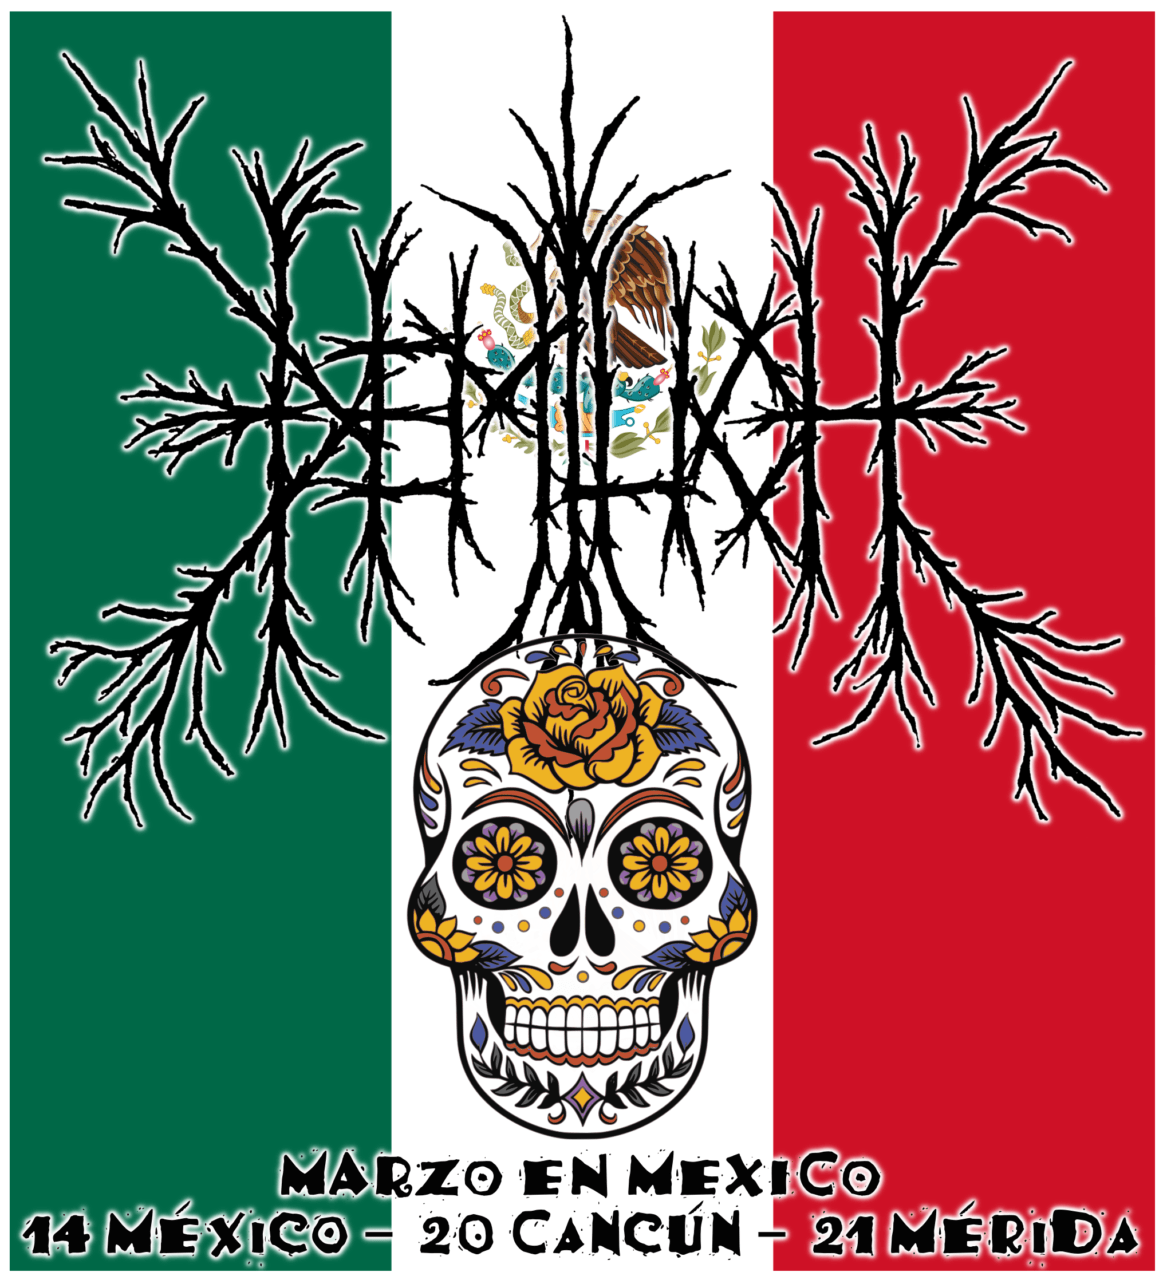 Tacos, margaritas and death metal